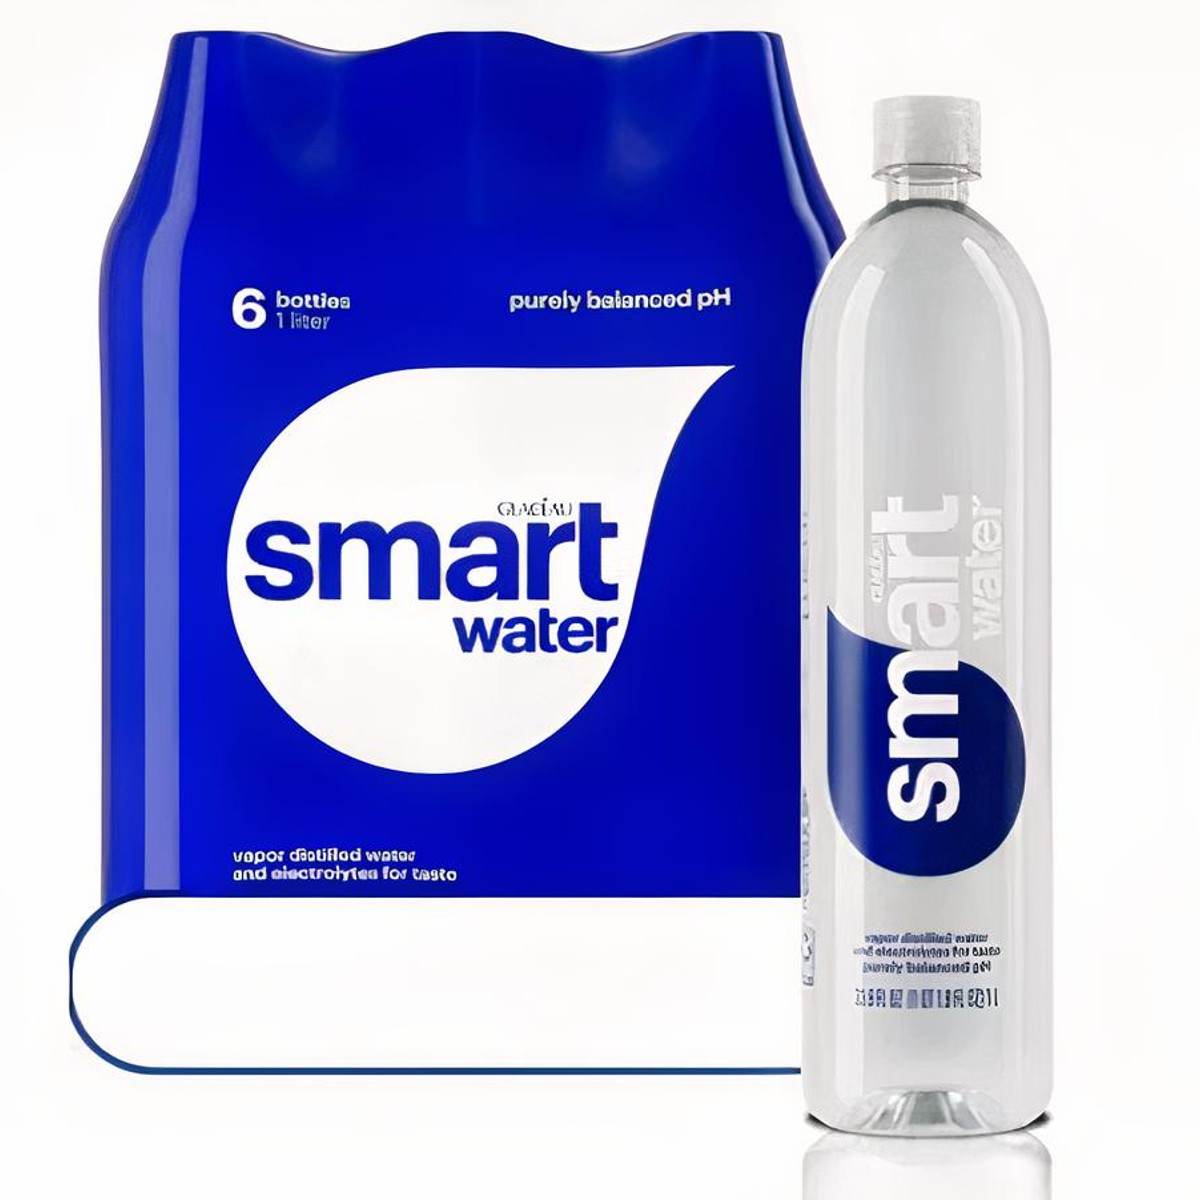 Member's Mark Purified Bottled Water (8 fl. oz., 80 pk.) - Sam's Club